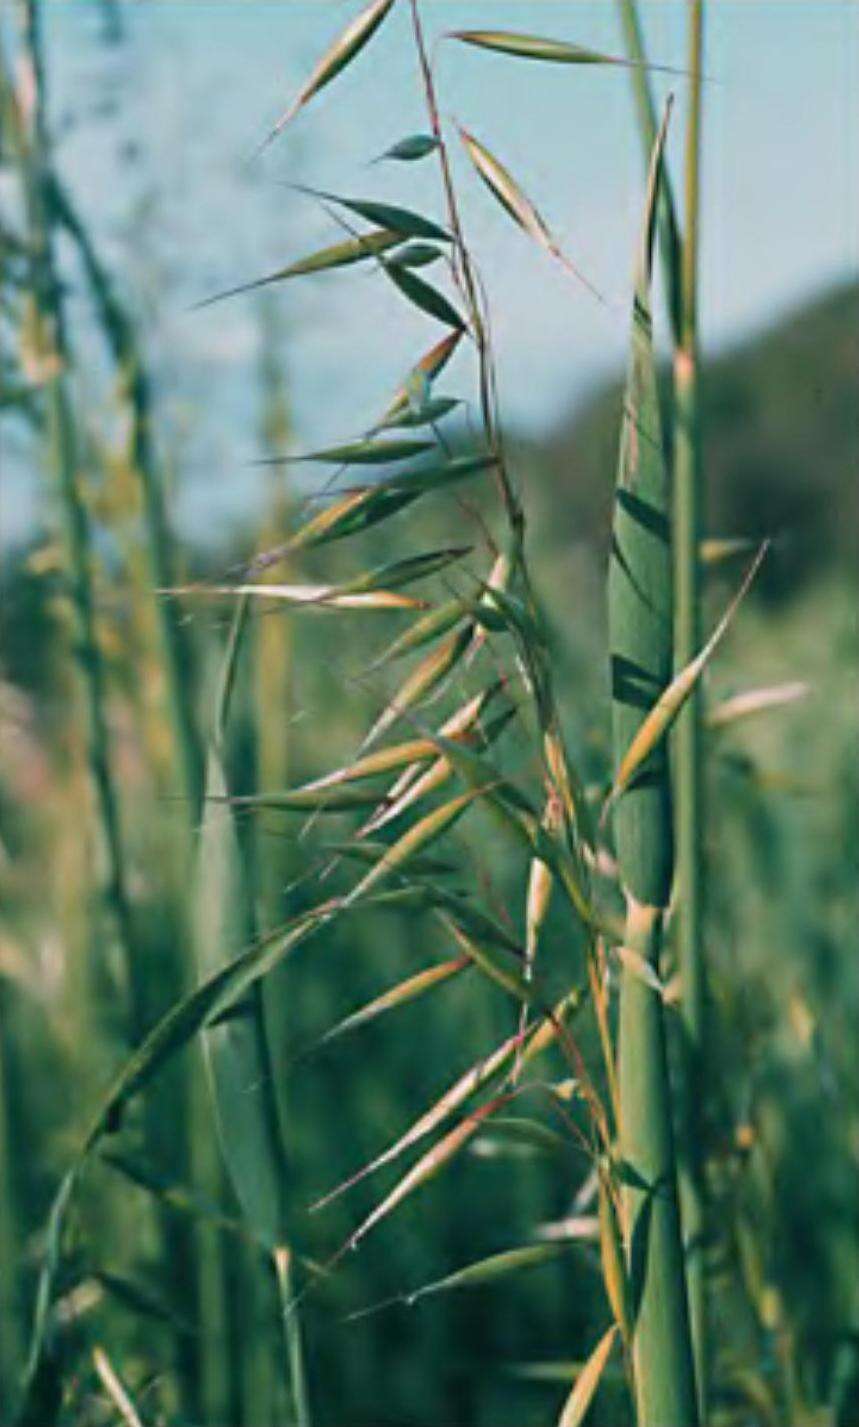 Image of lopsided oat